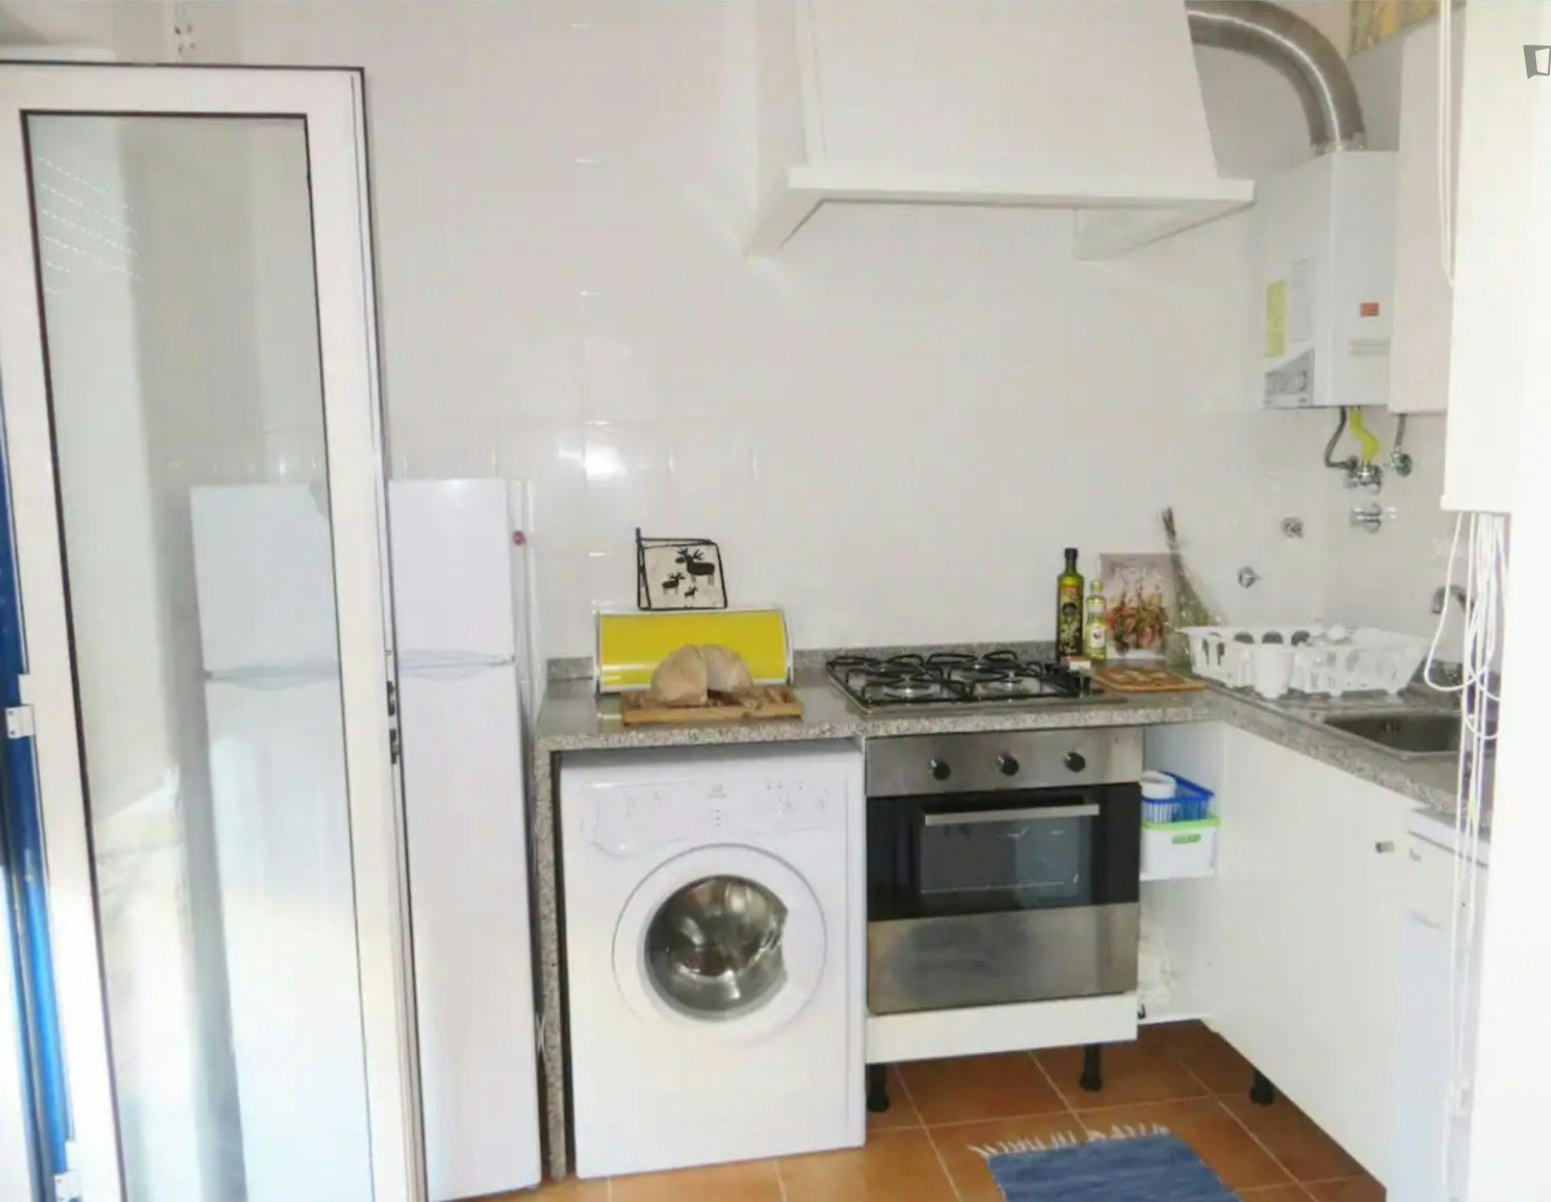 Lovely 2-bedroom apartment in Porto Covo